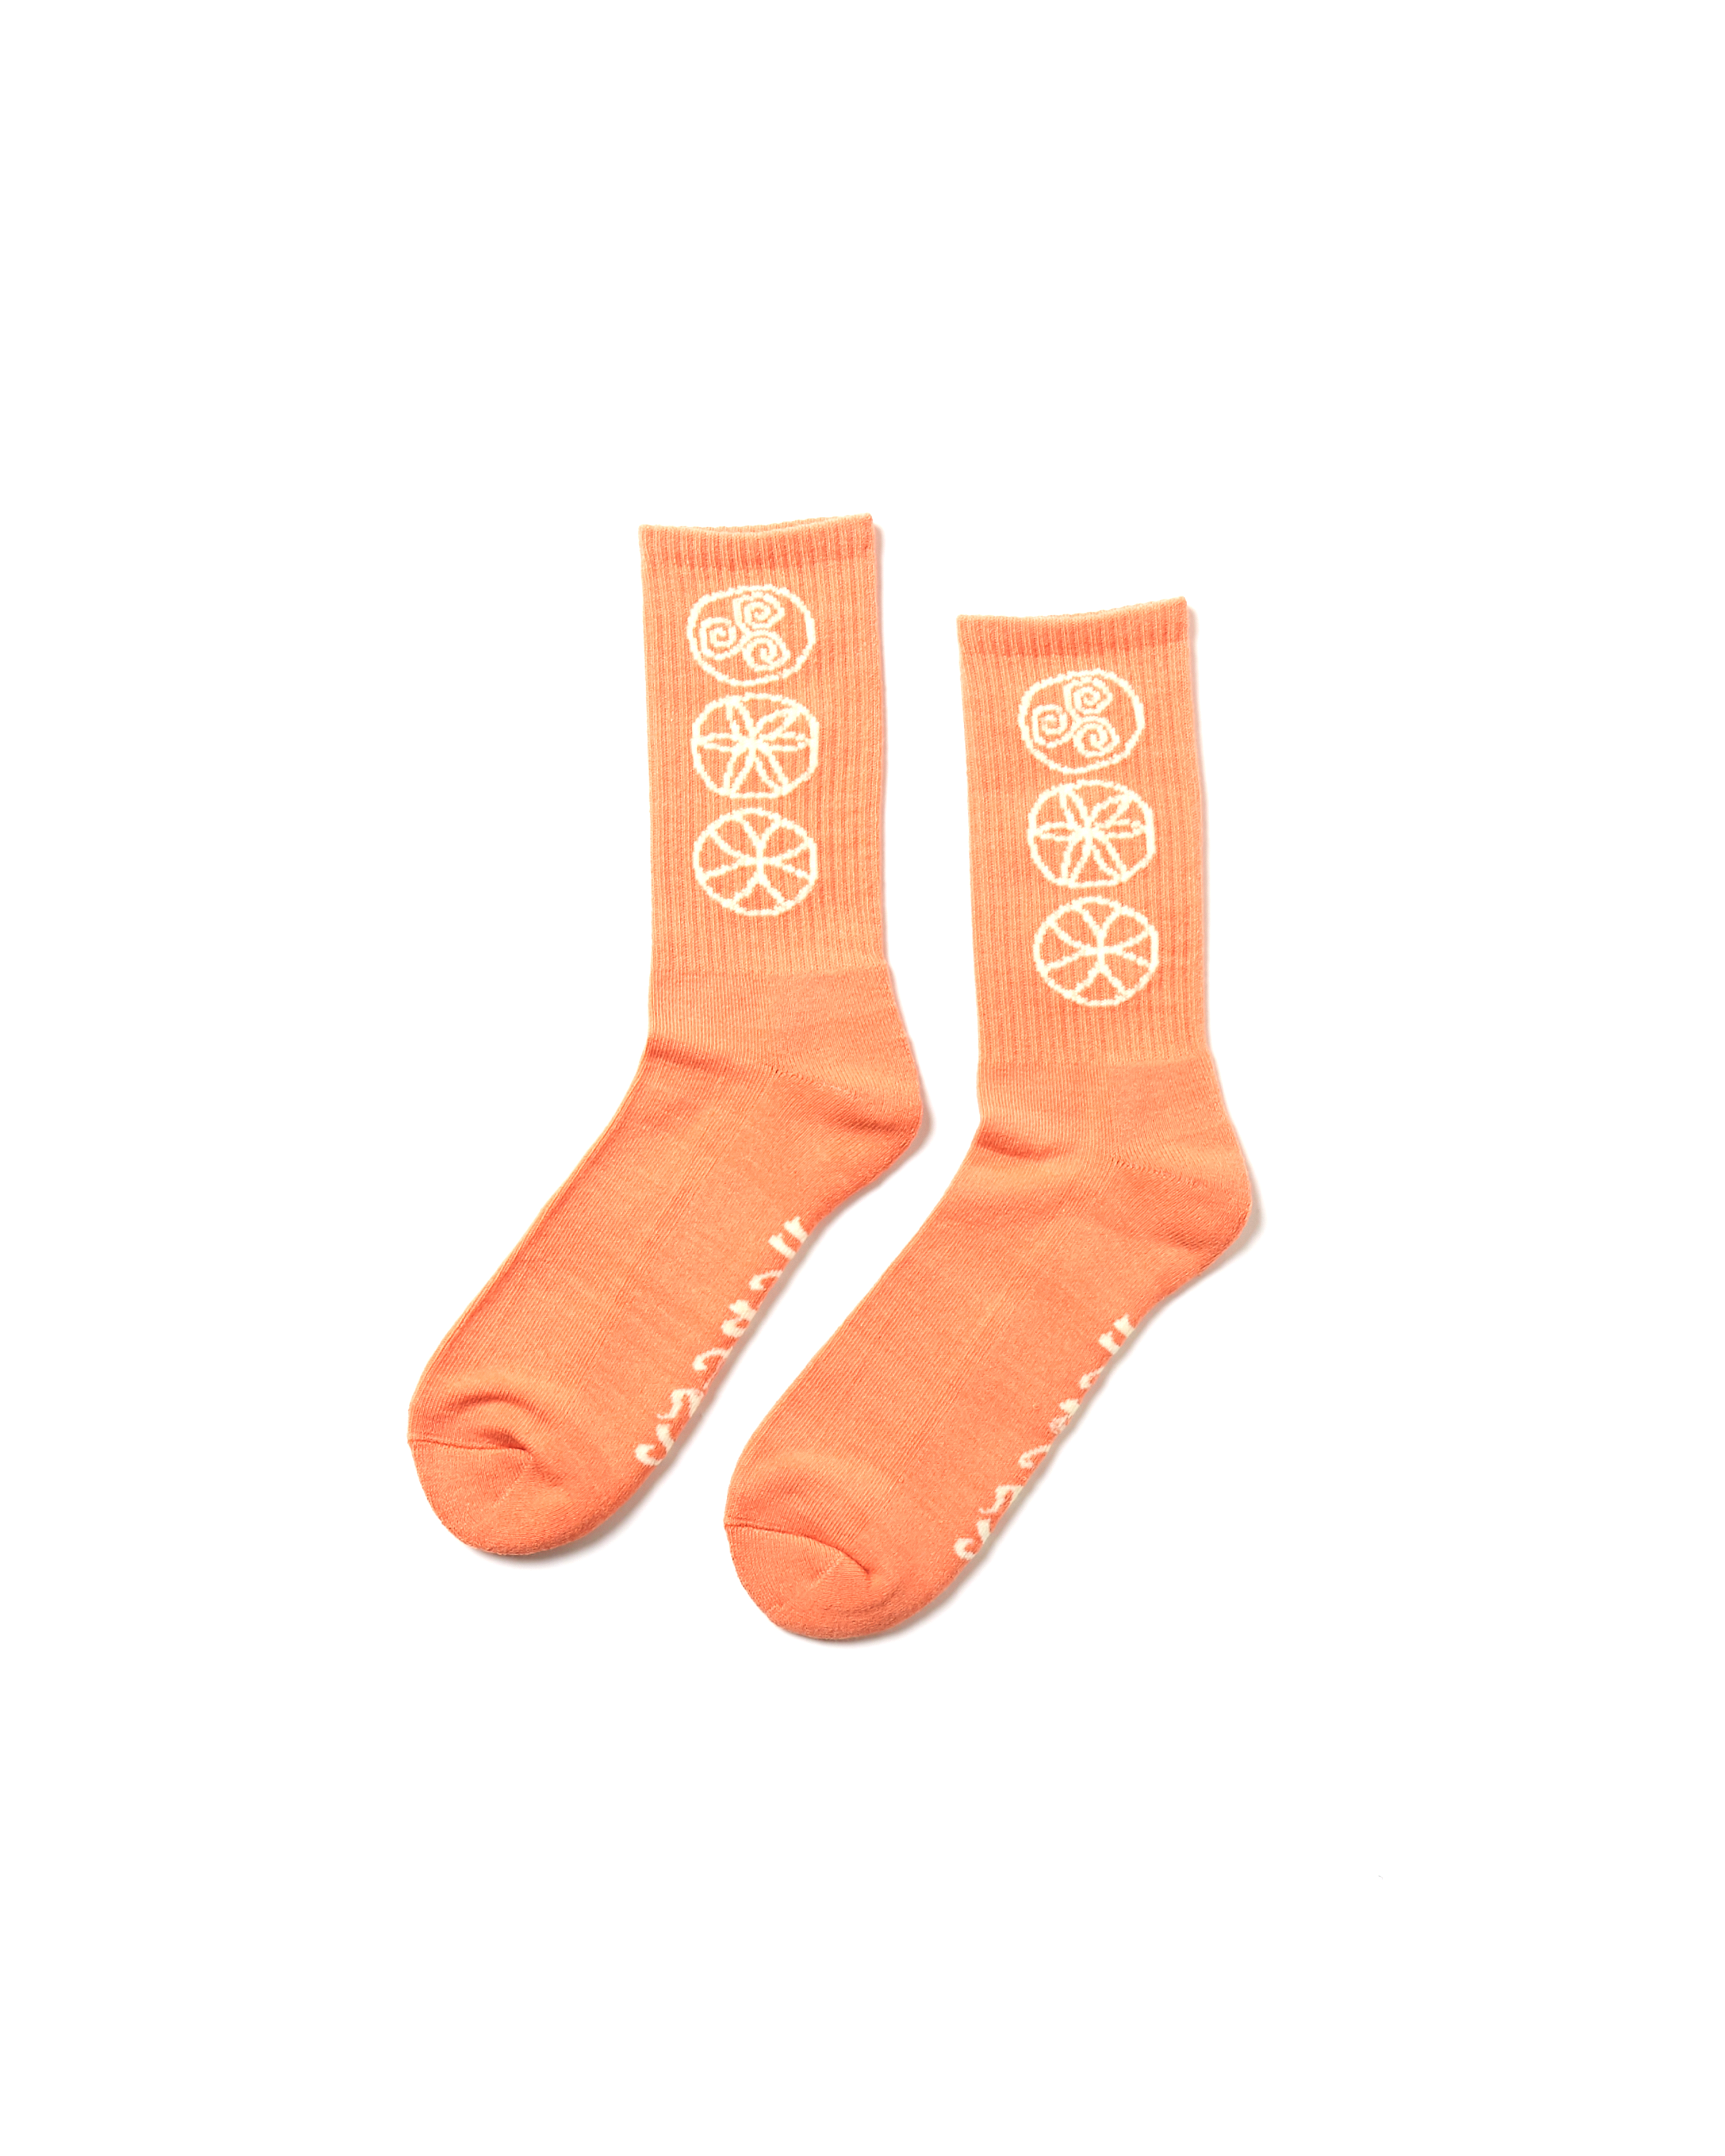 Rune Socks - Orange / Ecru